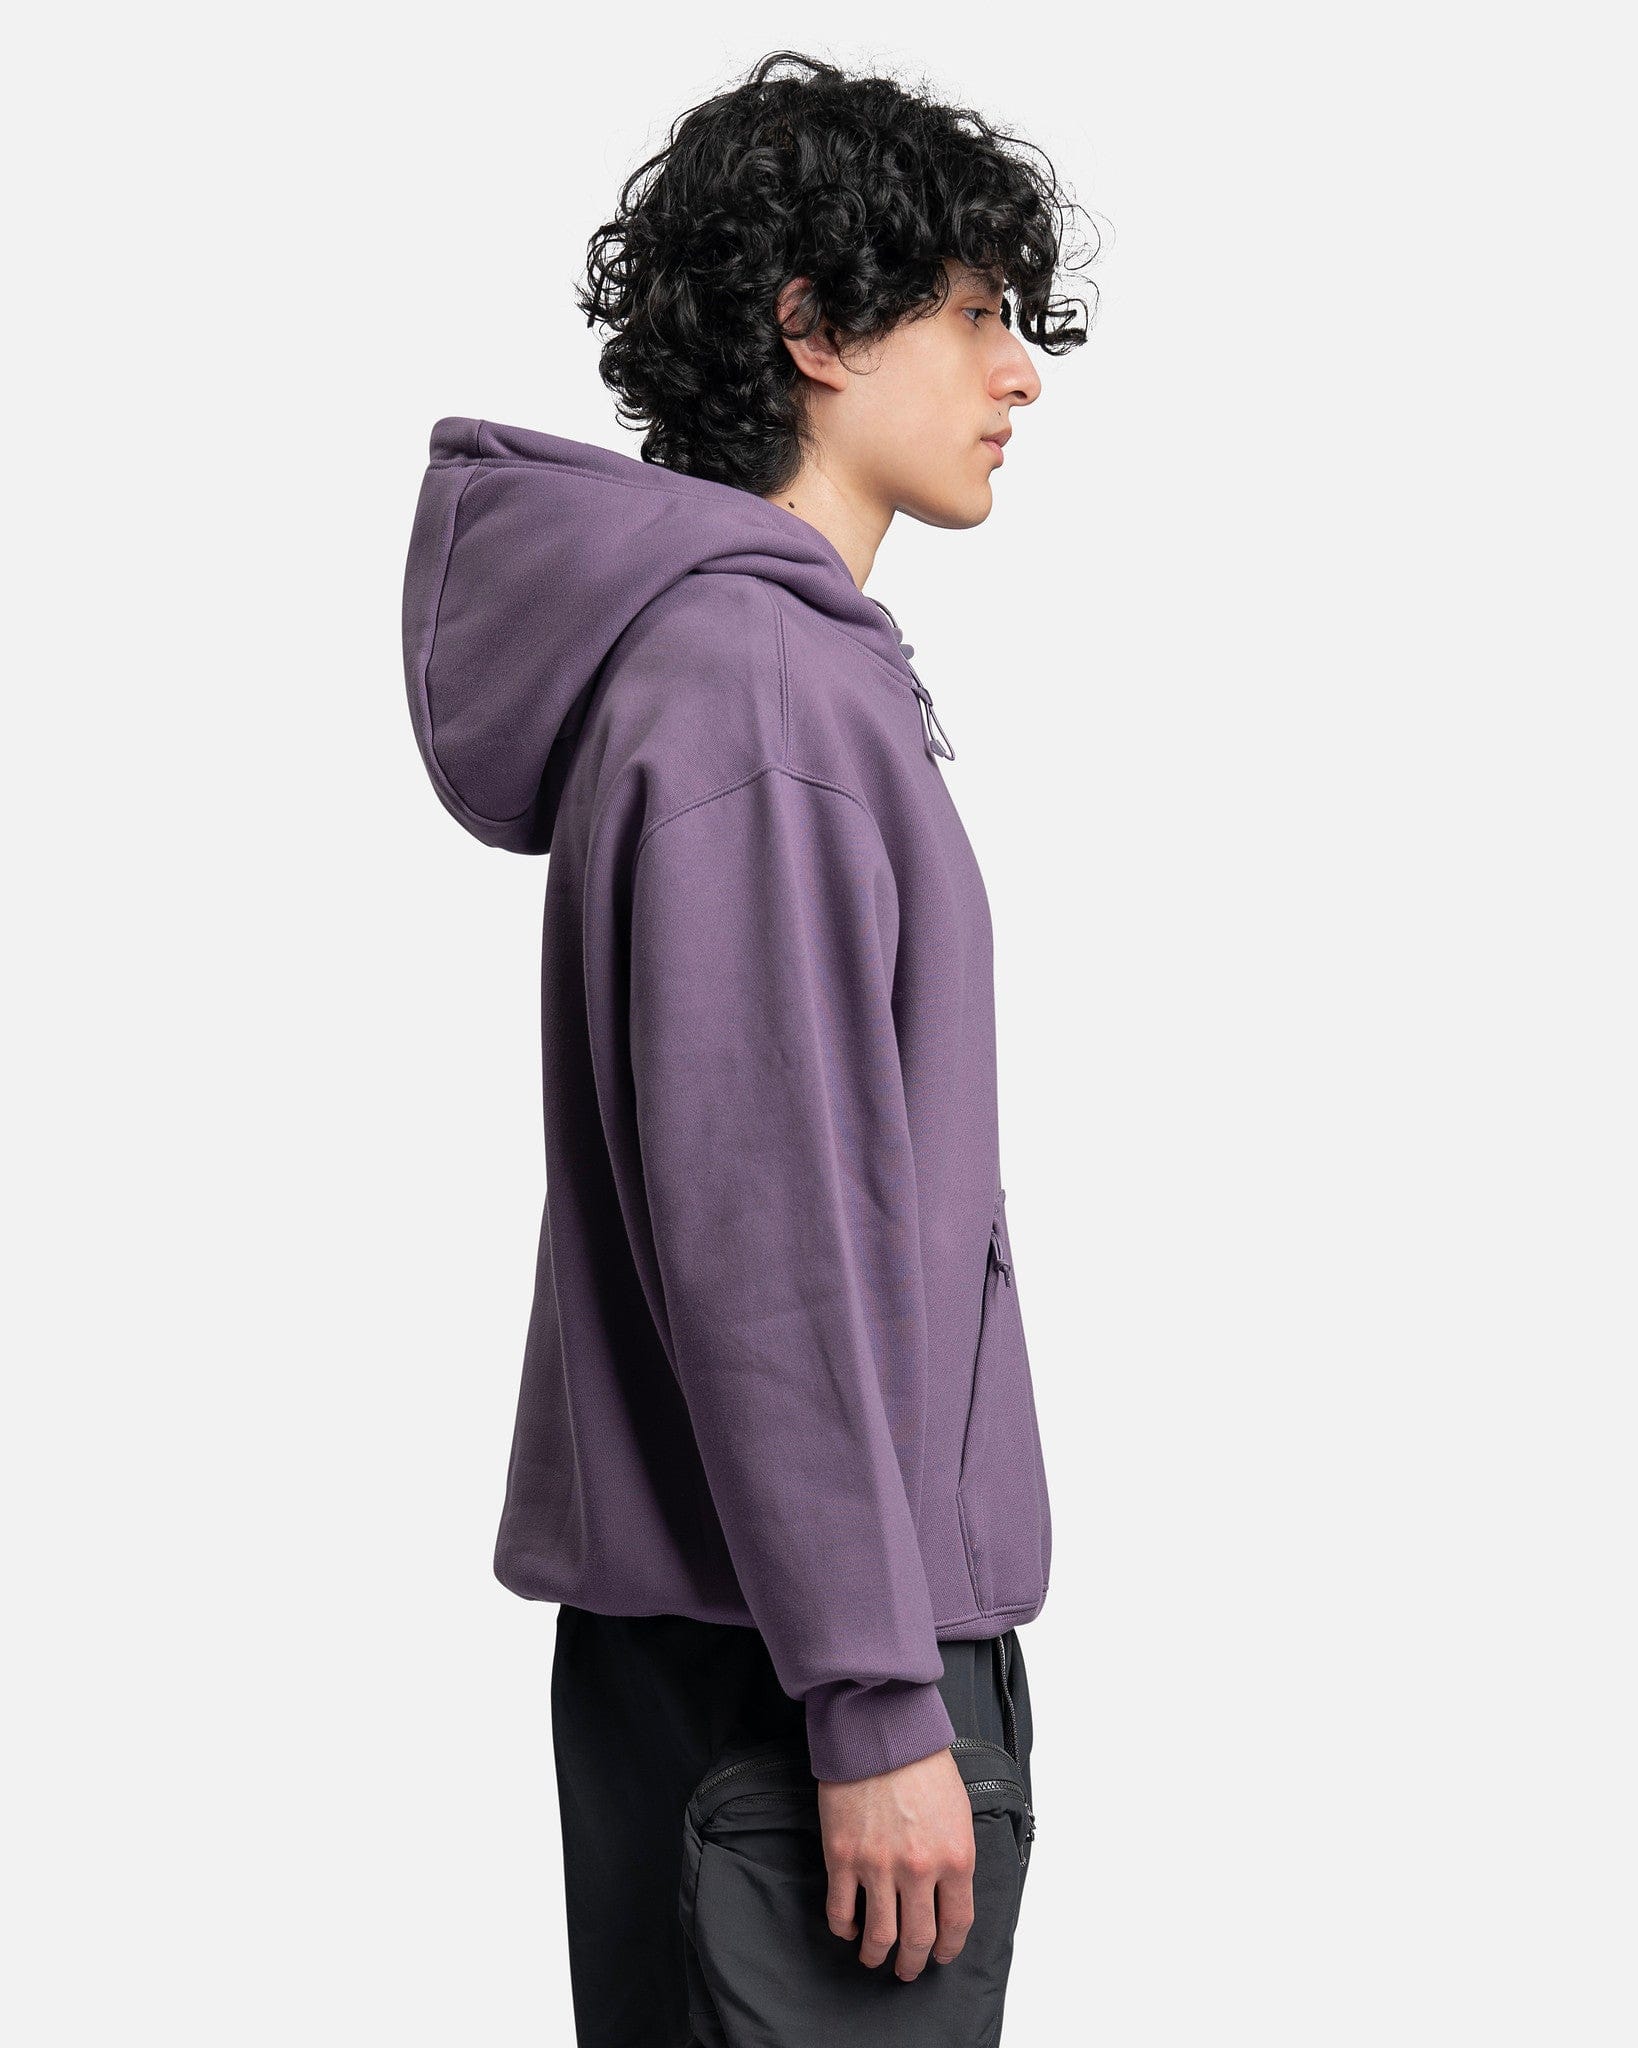 Nike Men's Sweatshirts ACG Therma-FIT Hoodie in Canyon Purple